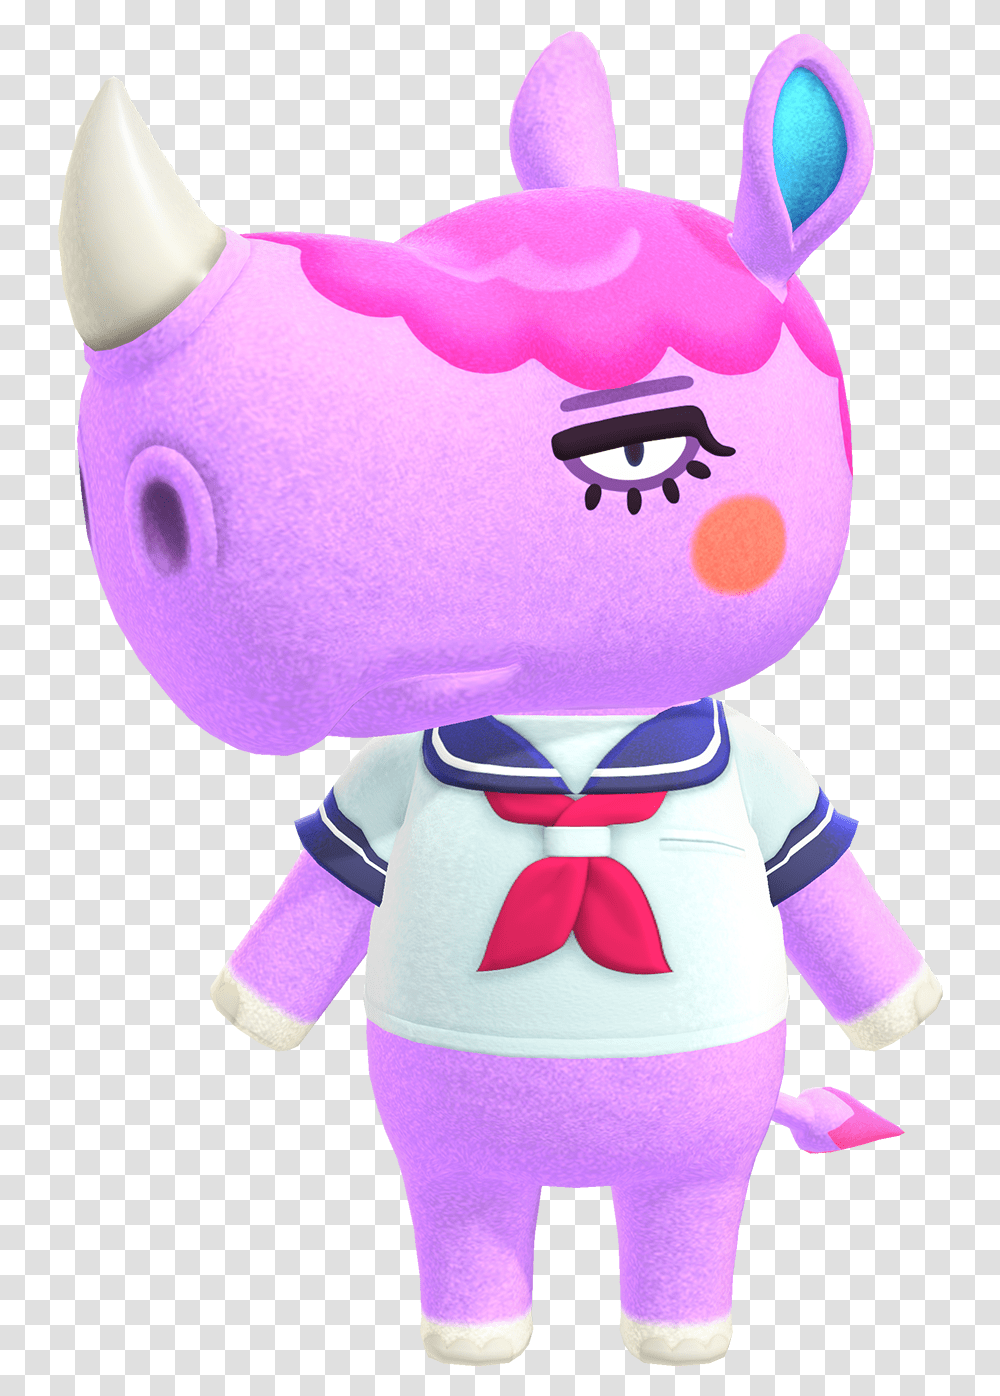 Rene Animal Crossing Wiki Nookipedia Renee Animal Crossing New Horizons, Toy, Figurine, Plush, Doll Transparent Png